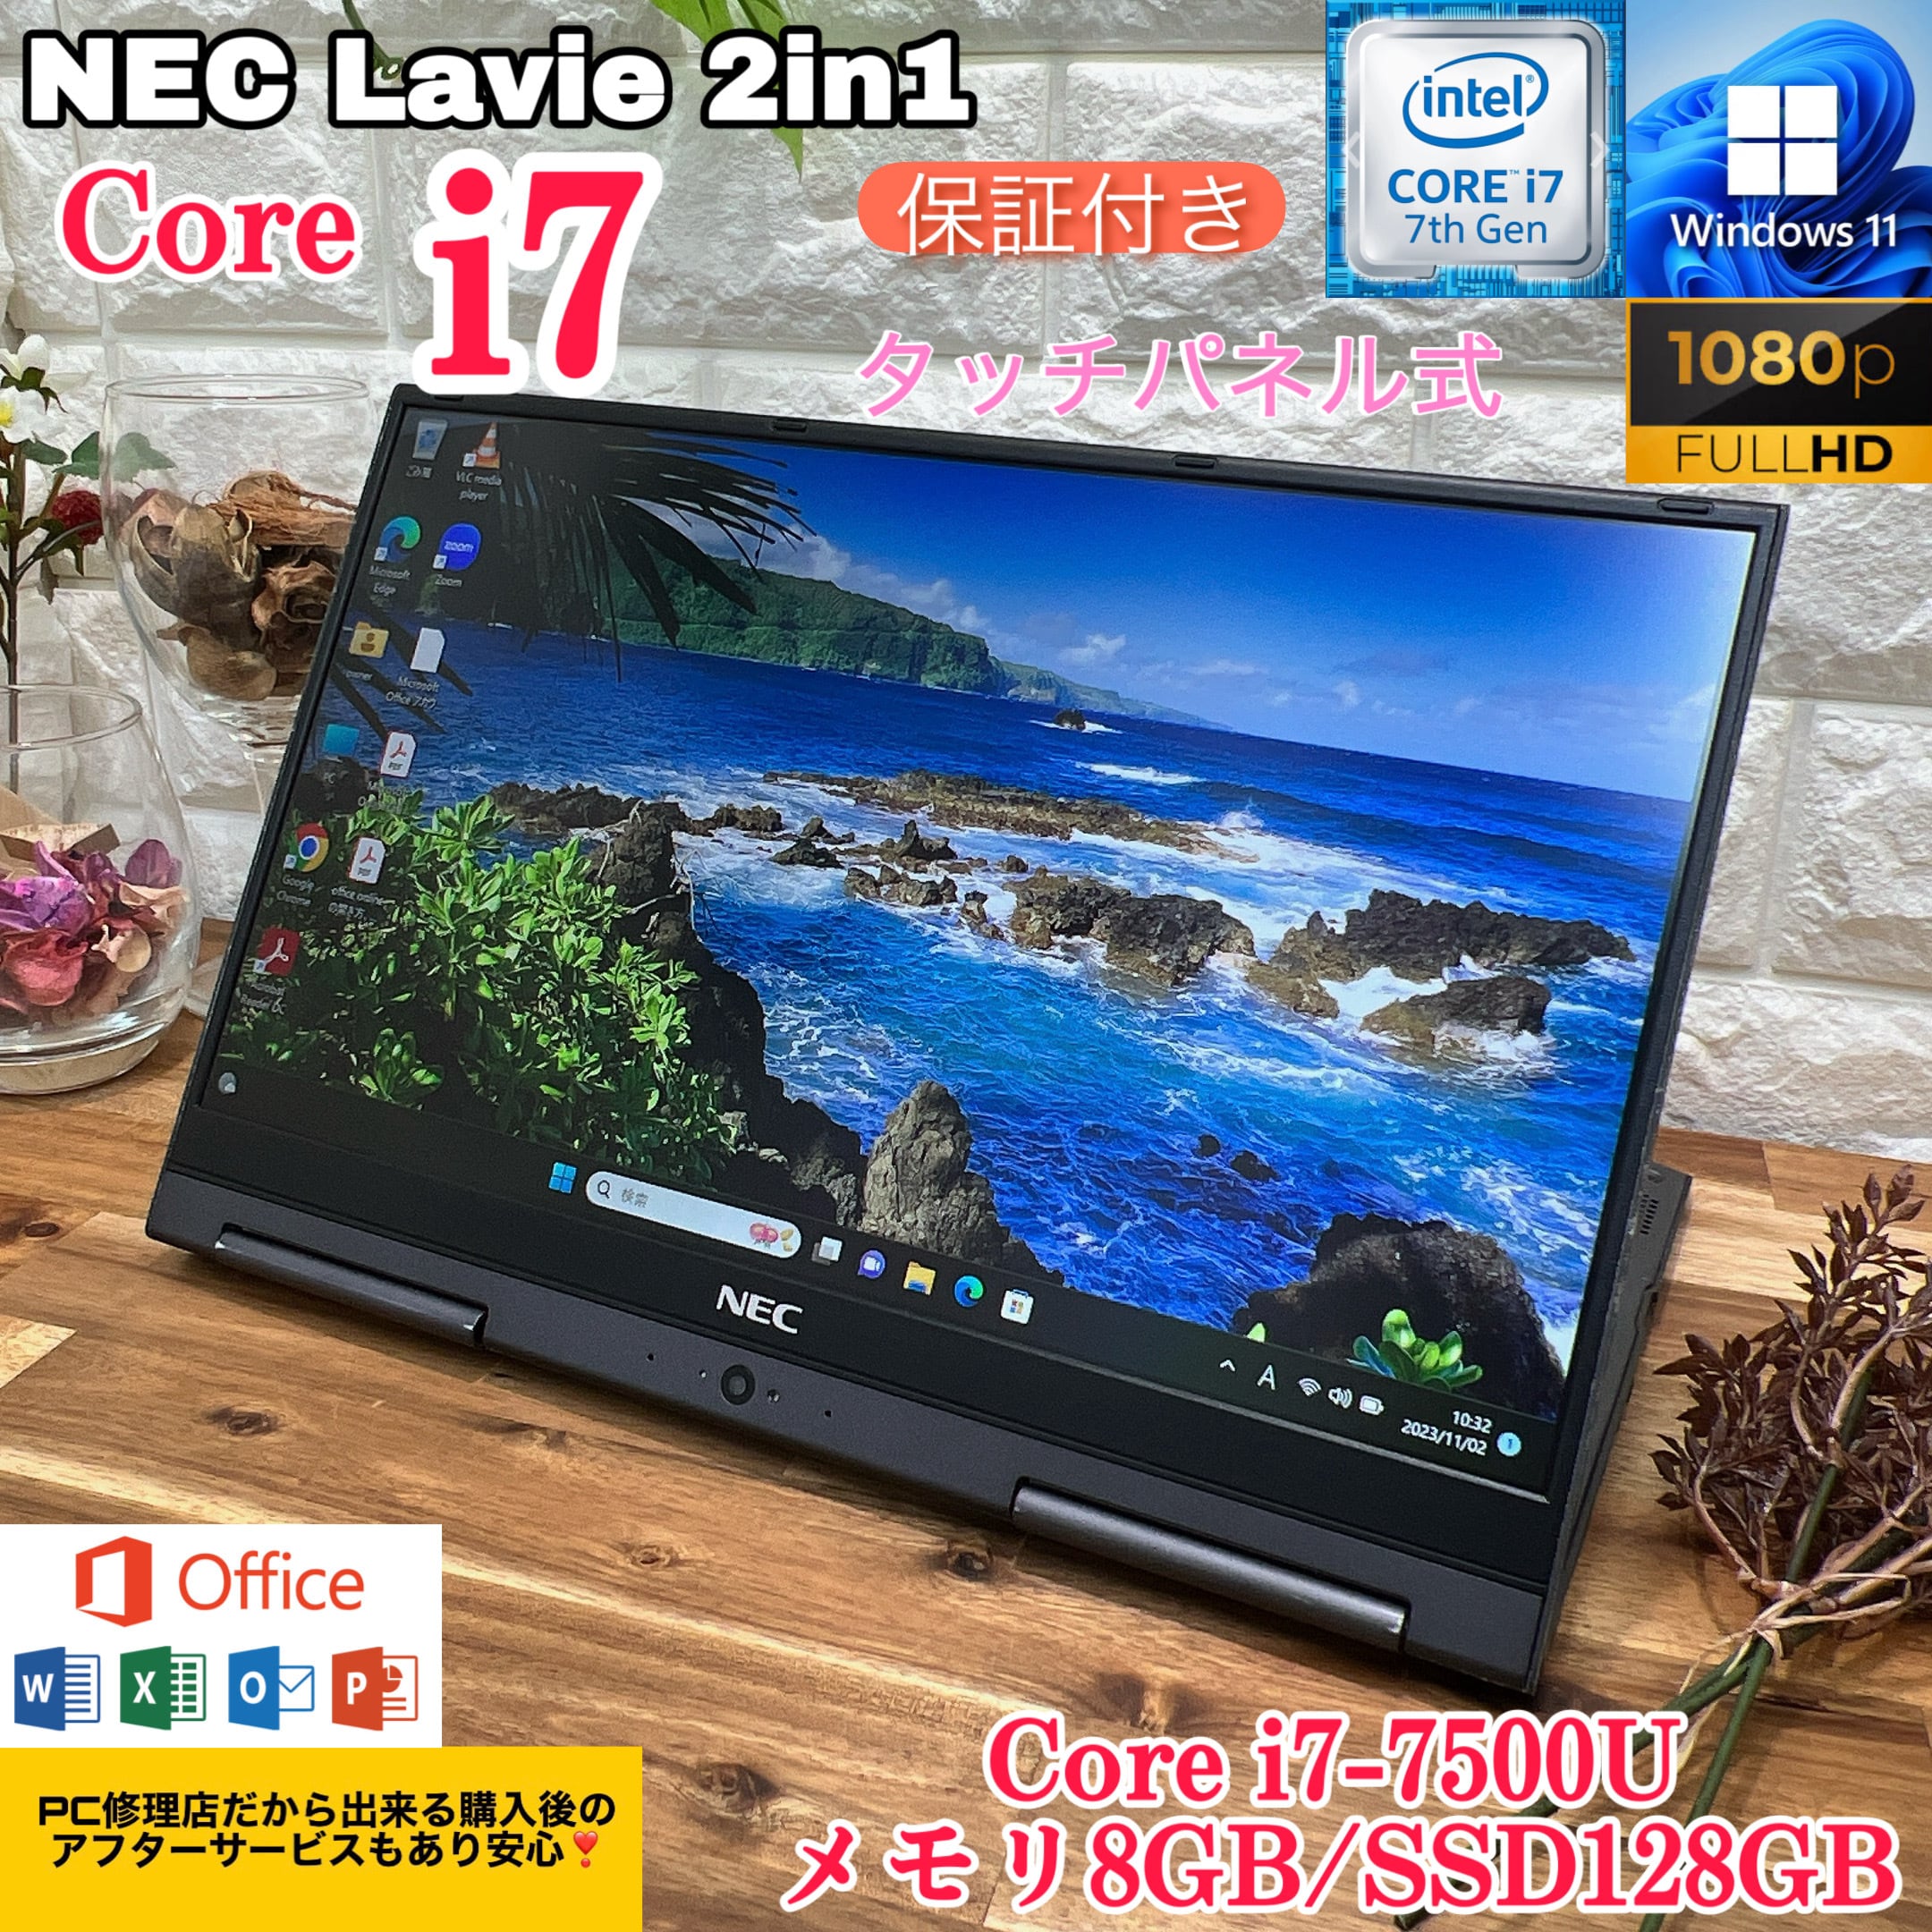 NEC Lavie Direct☘新品SSD256GB☘第7世代☘メモリ8GB